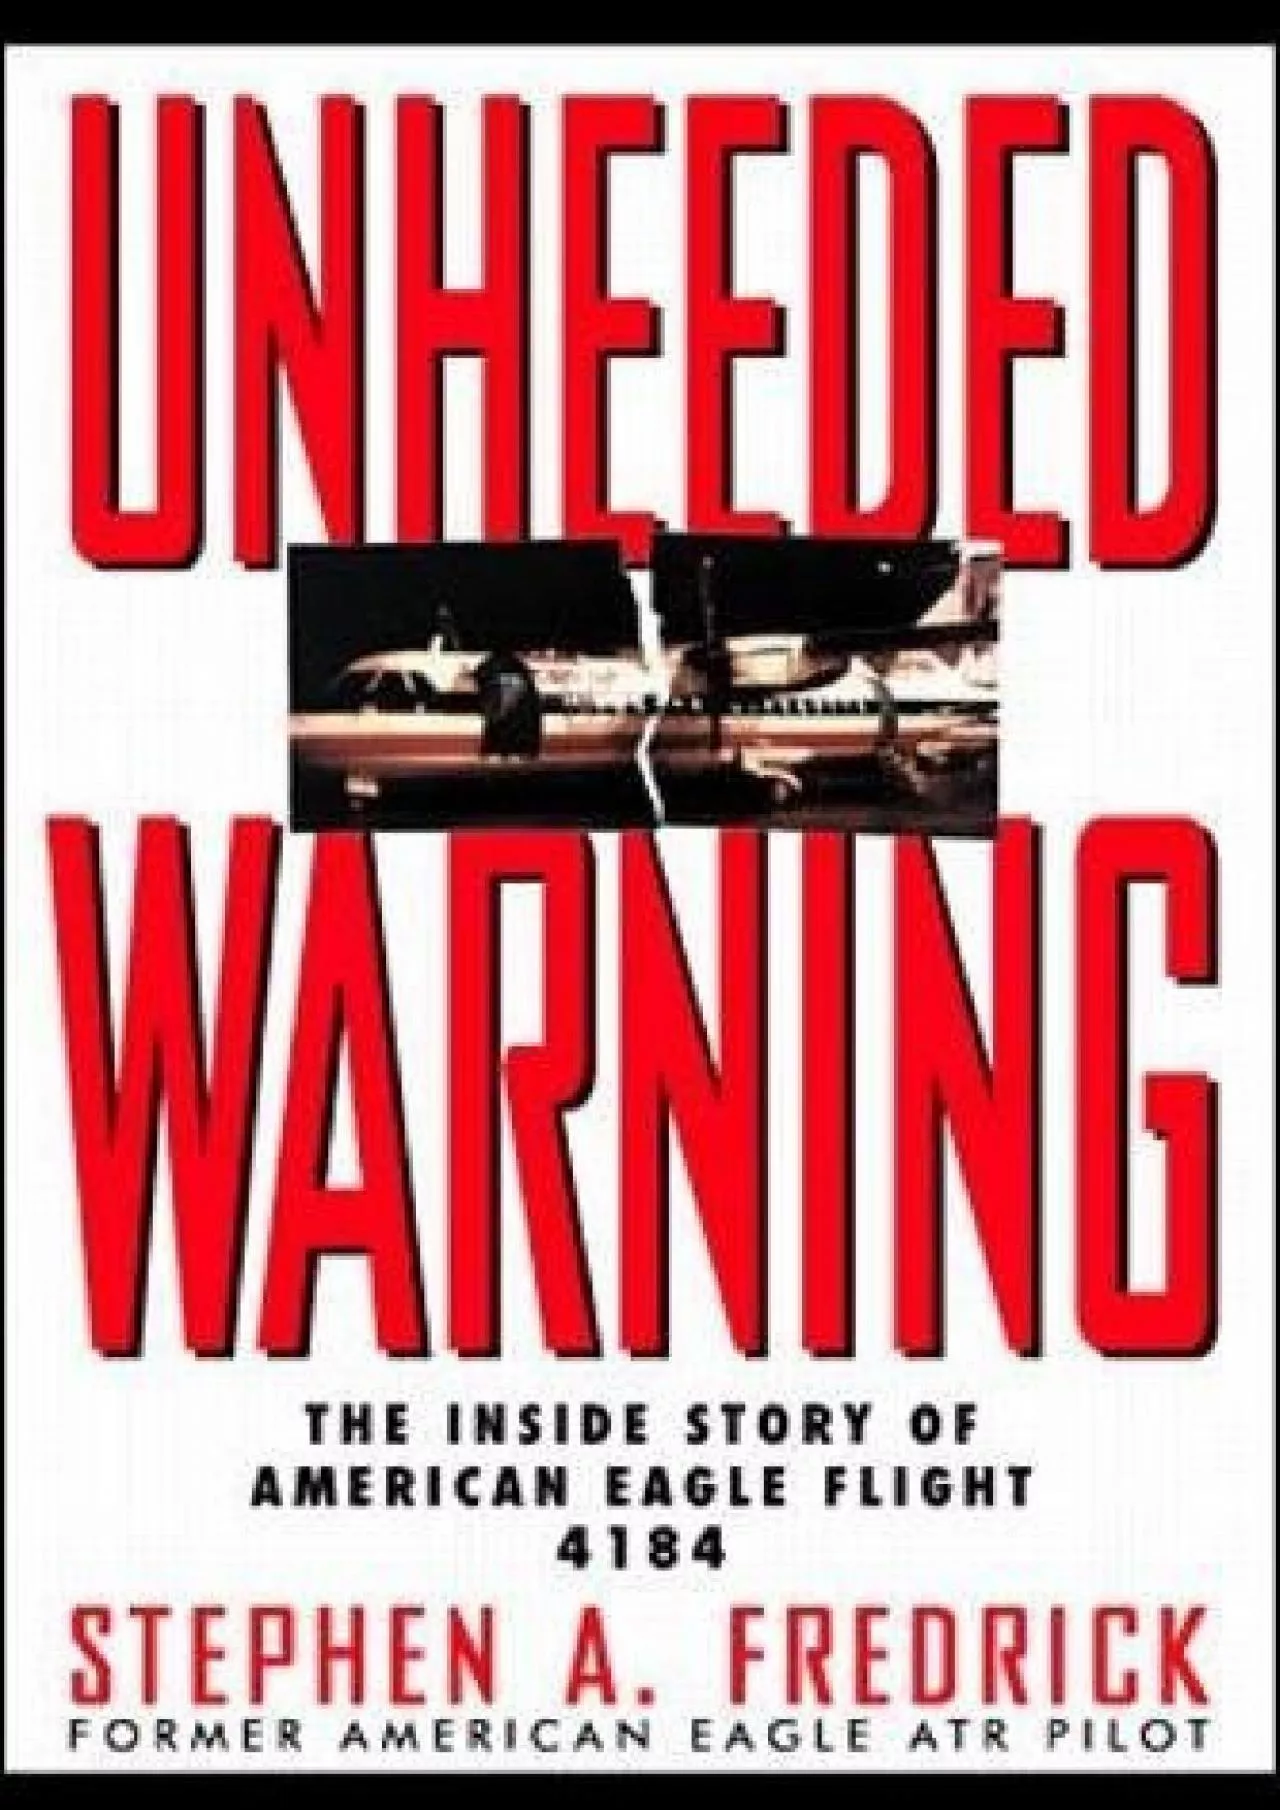 [READ]-Unheeded Warning: The Inside Story of American Eagle Flight 4184